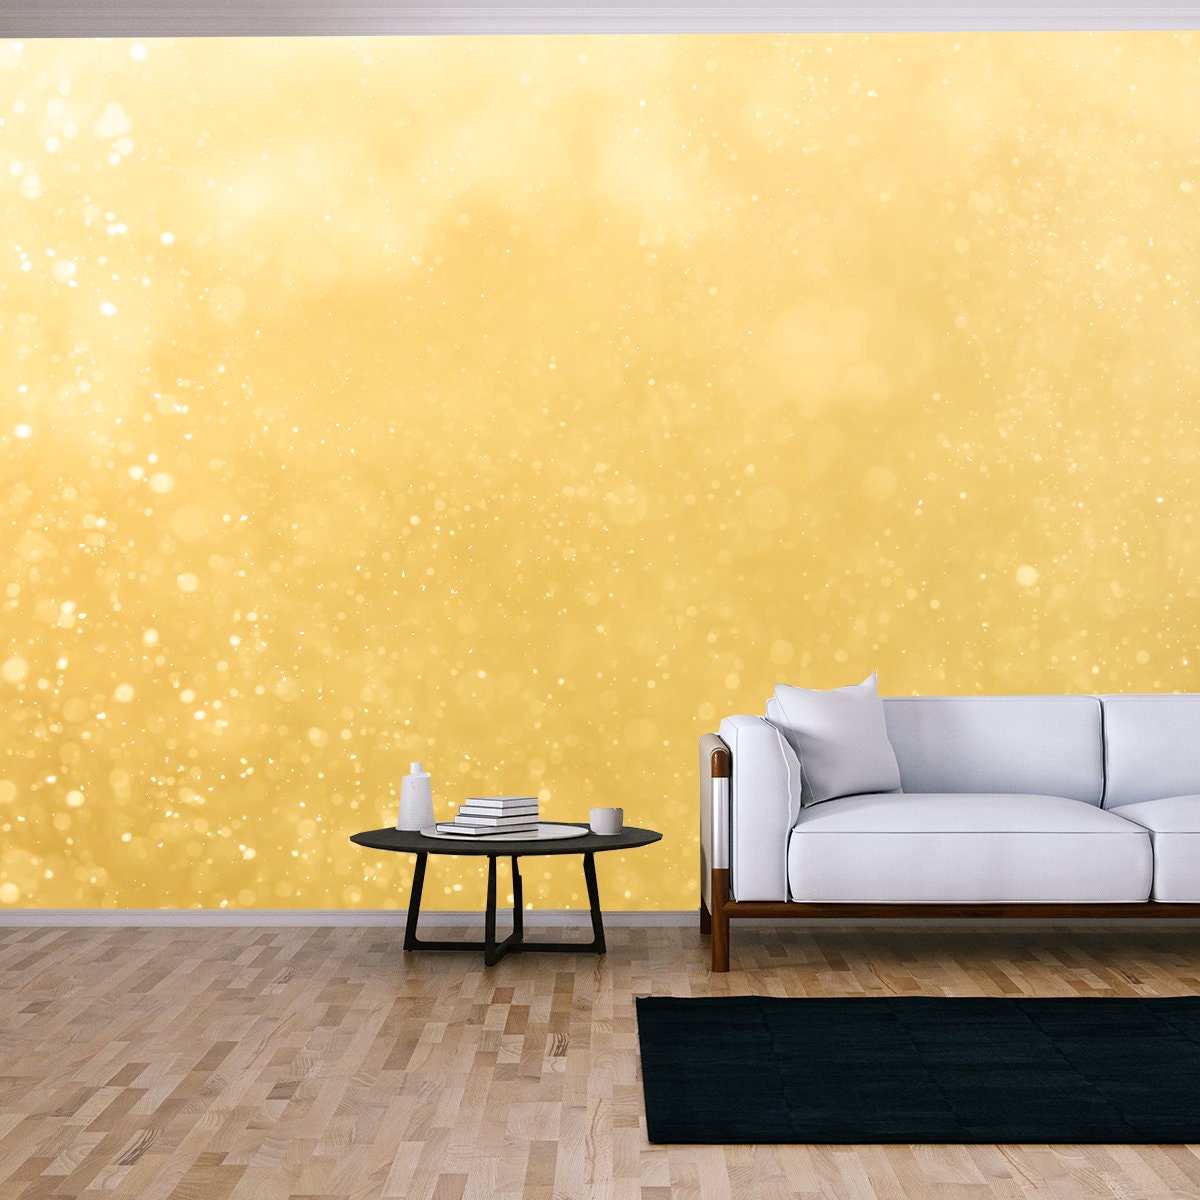 Abstract Yellow Bokeh Defocus Background Wallpaper Living Room Mural